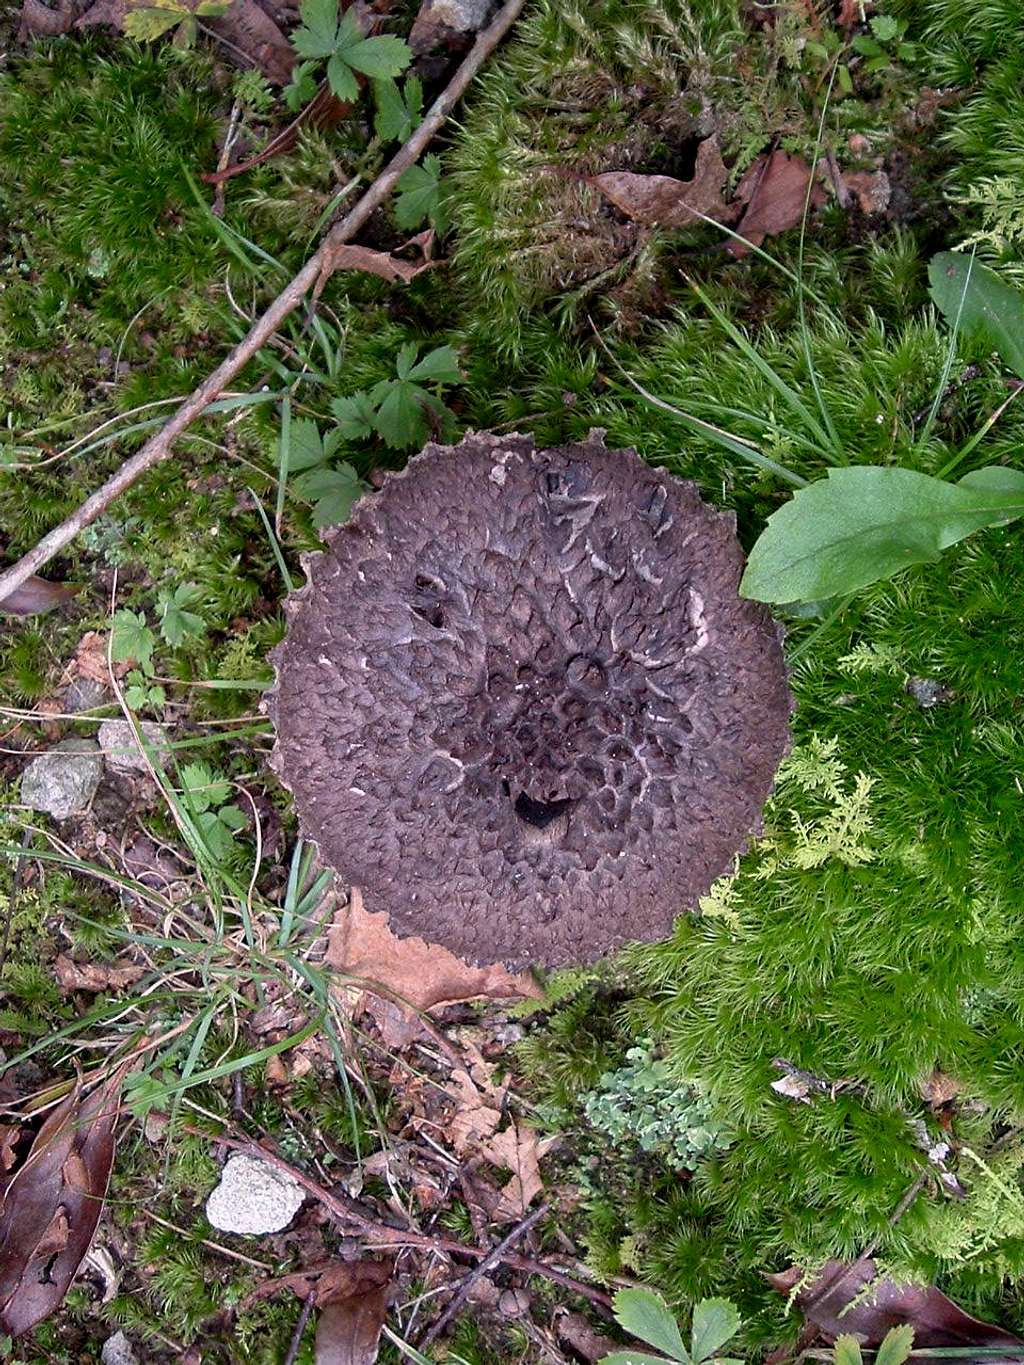 Black Mushroom on Appalachian Trail